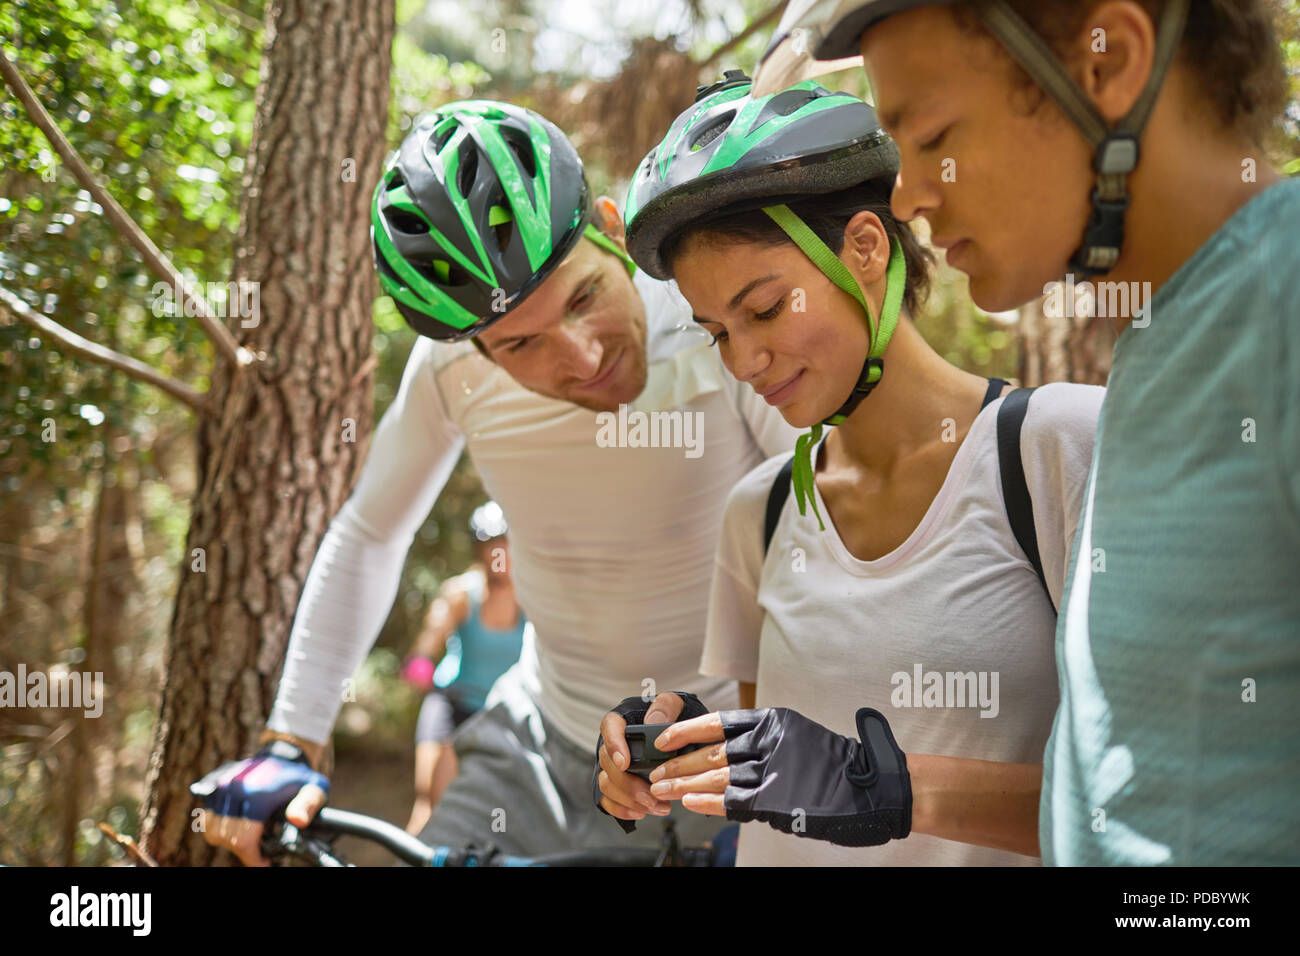 Friends mountain biking, checking wearable camera Stock Photo